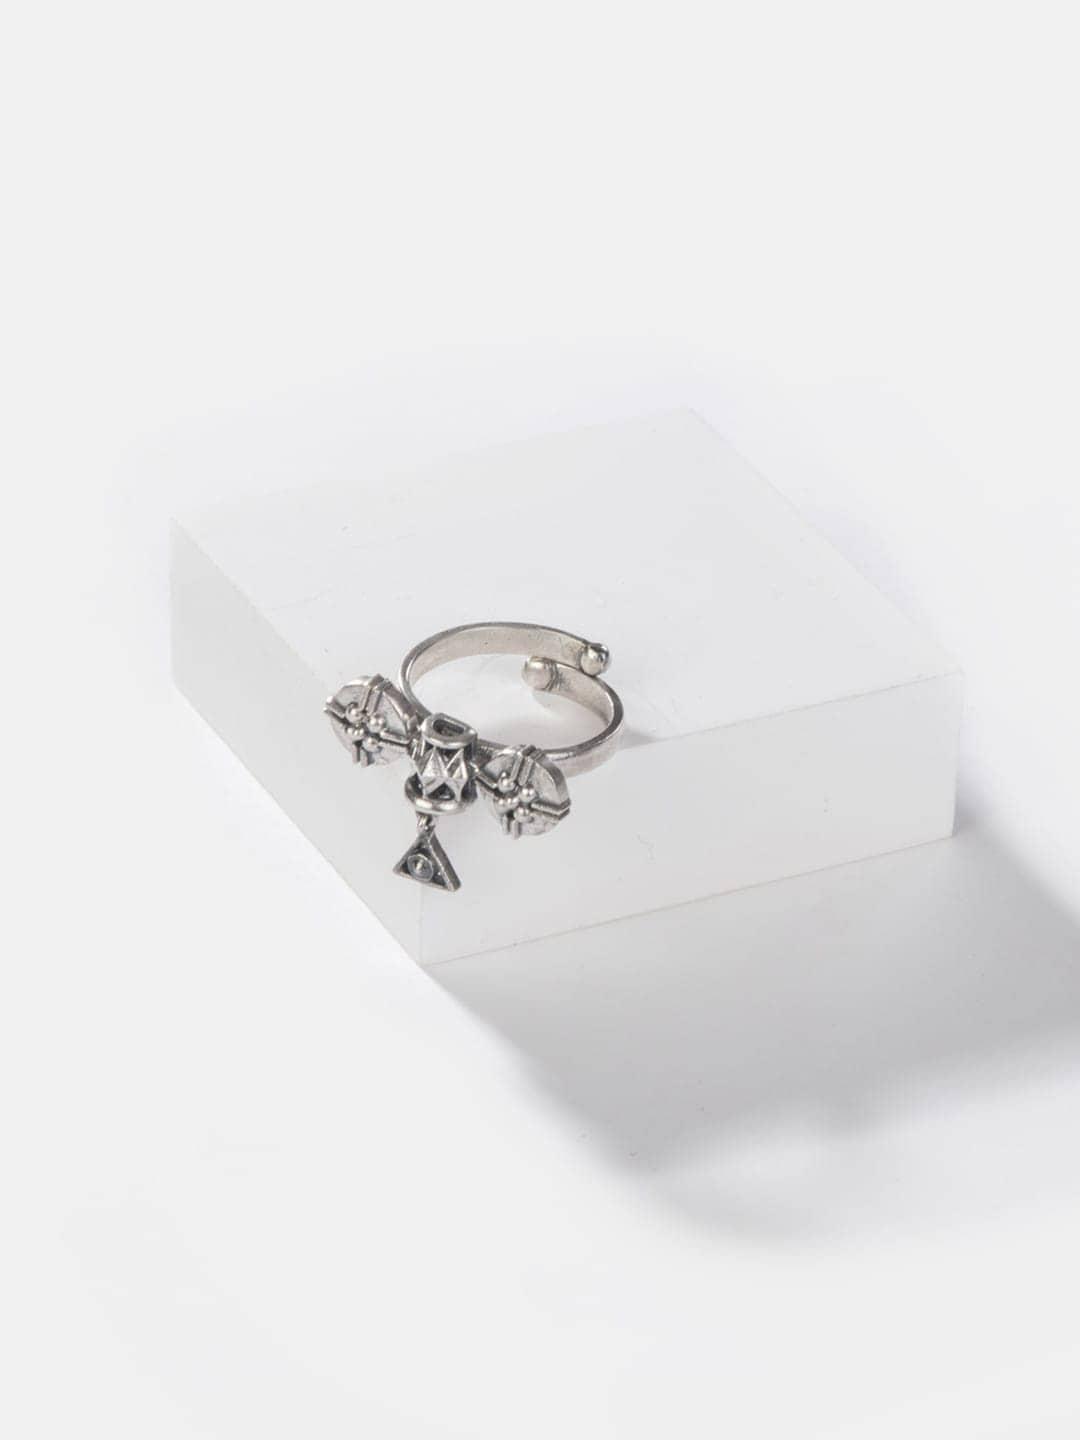 shaya oxidized silver-toned tribal hanswi inspired charm adjustable finger ring